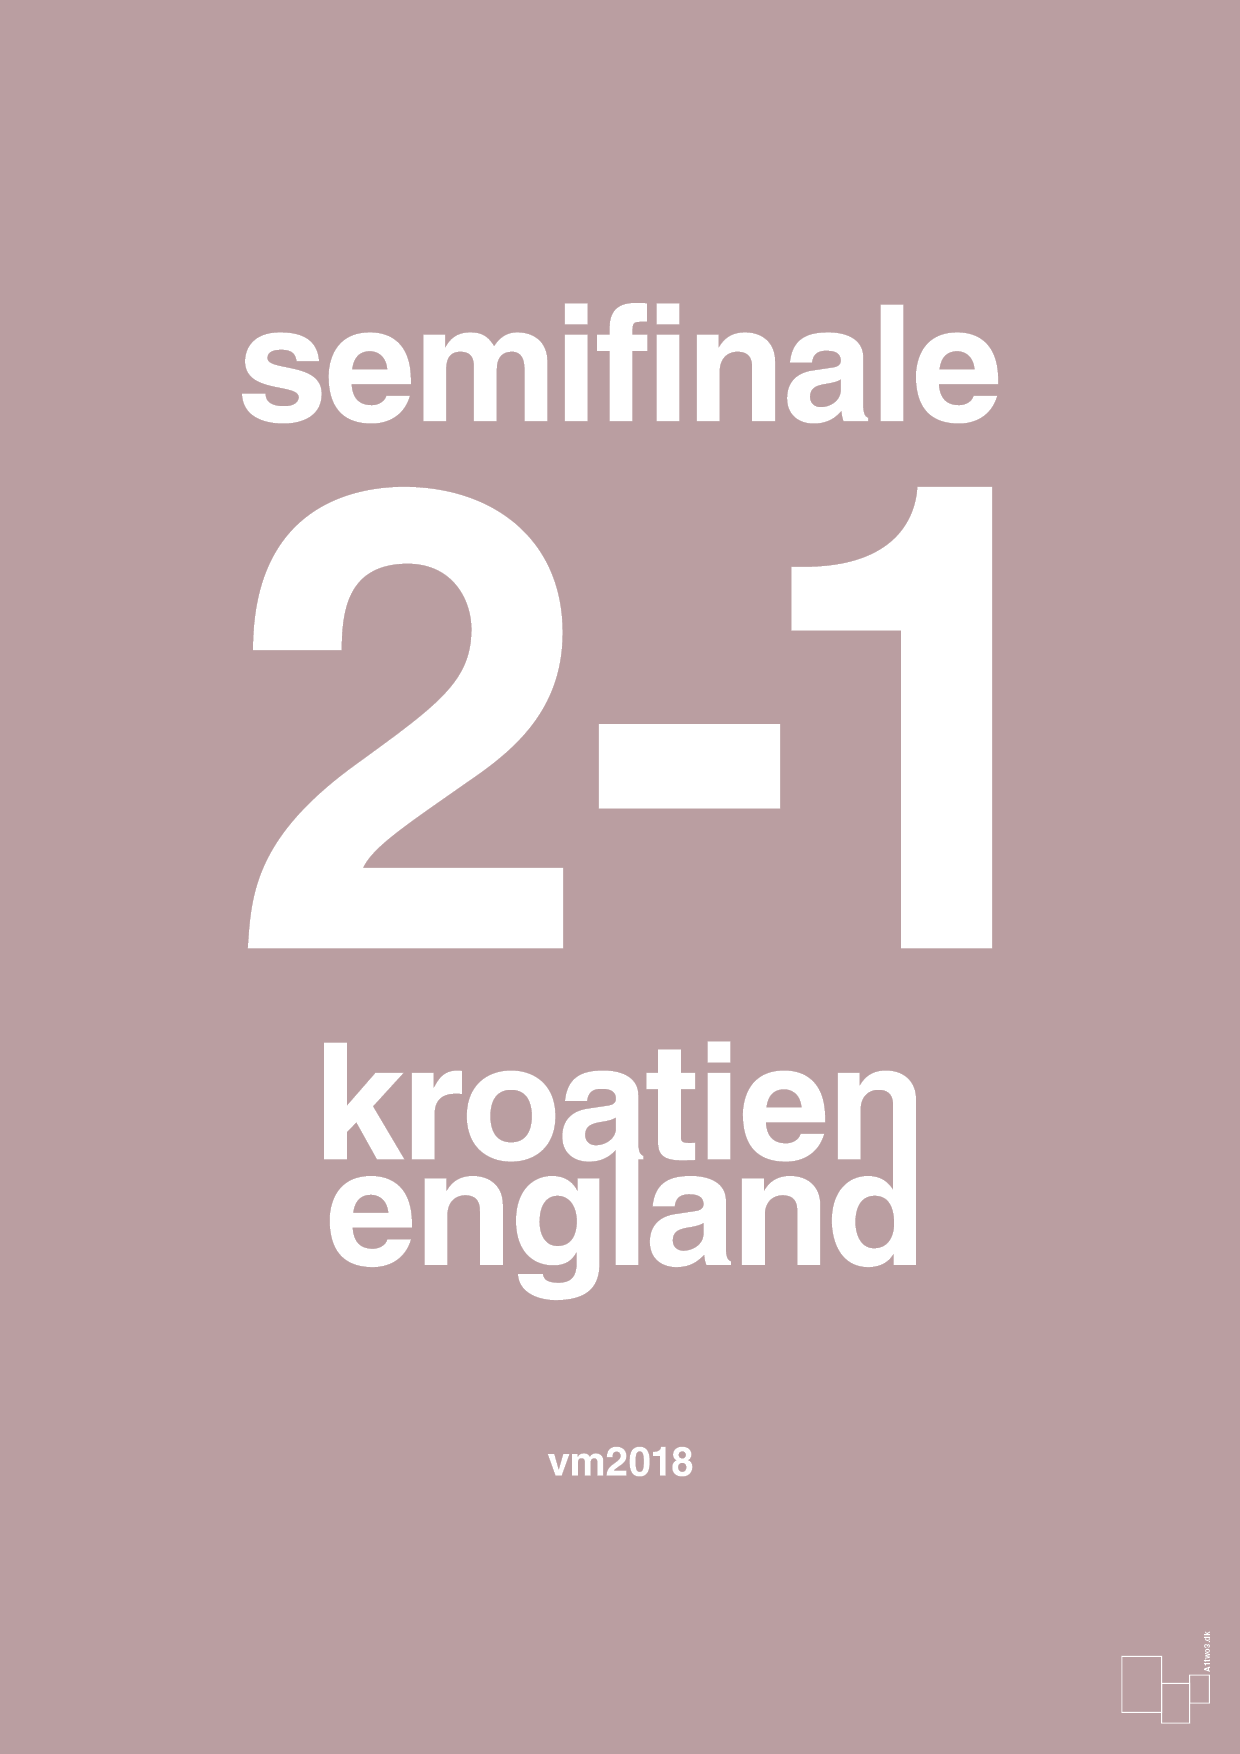 resultat for fodbold vm semifinale A i 2018 - Plakat med Sport & Fritid i Light Rose